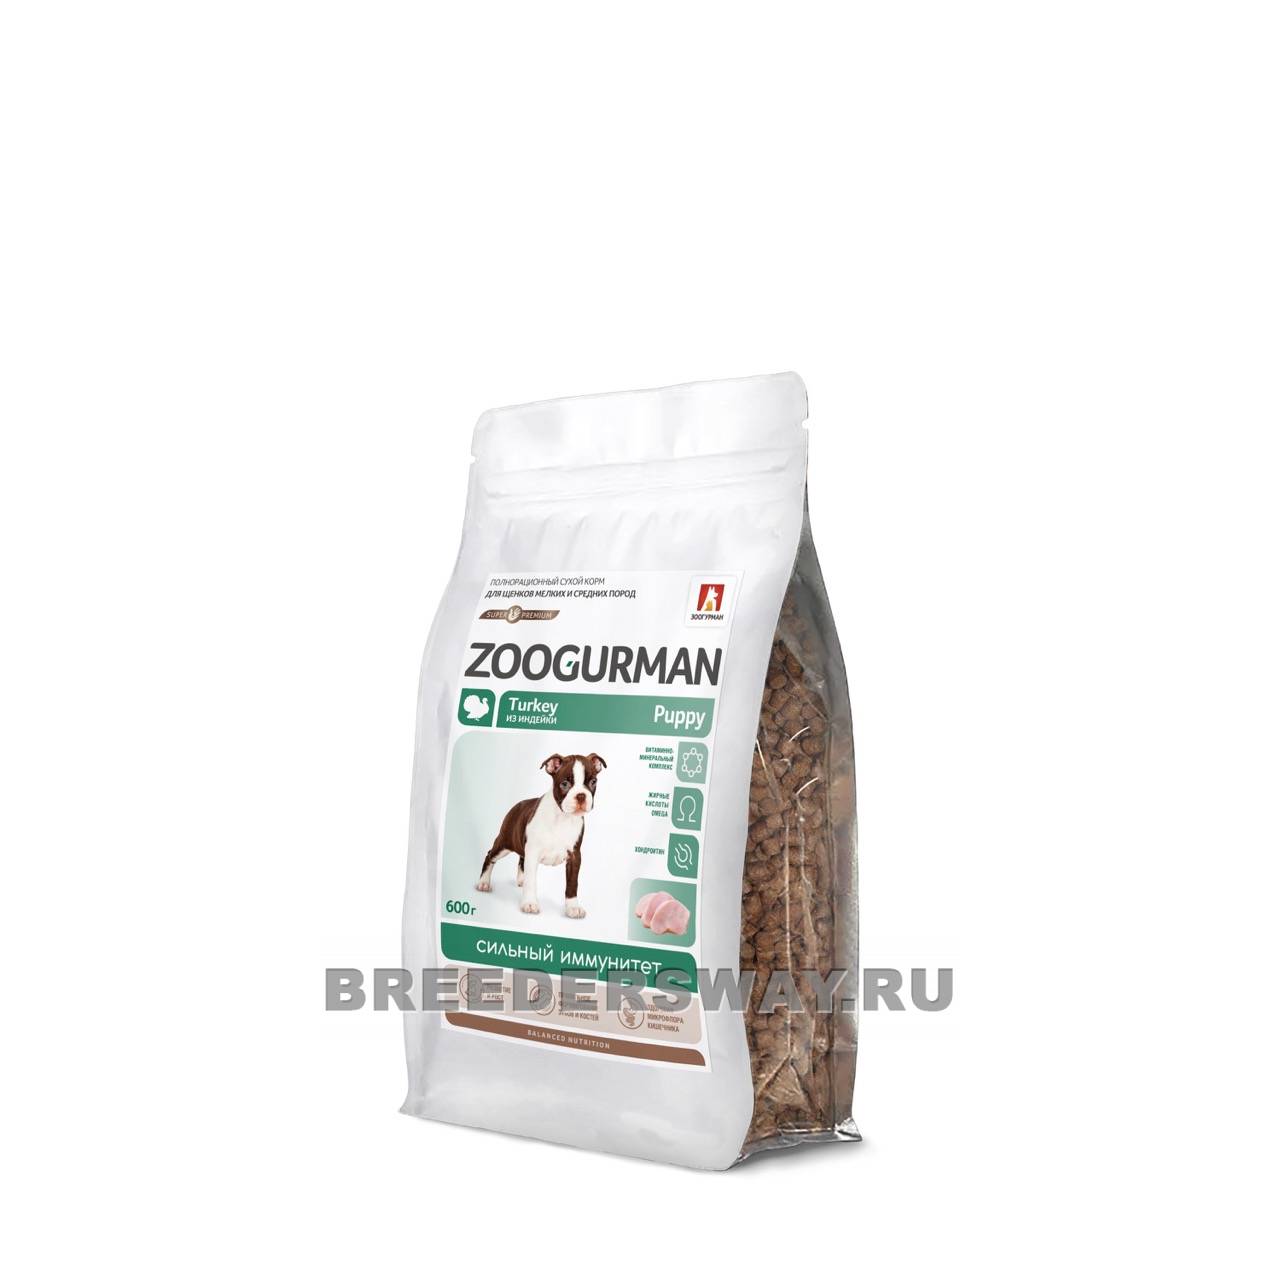 600гр Zoogurman Puppy супер-премиум для щенков Индейка